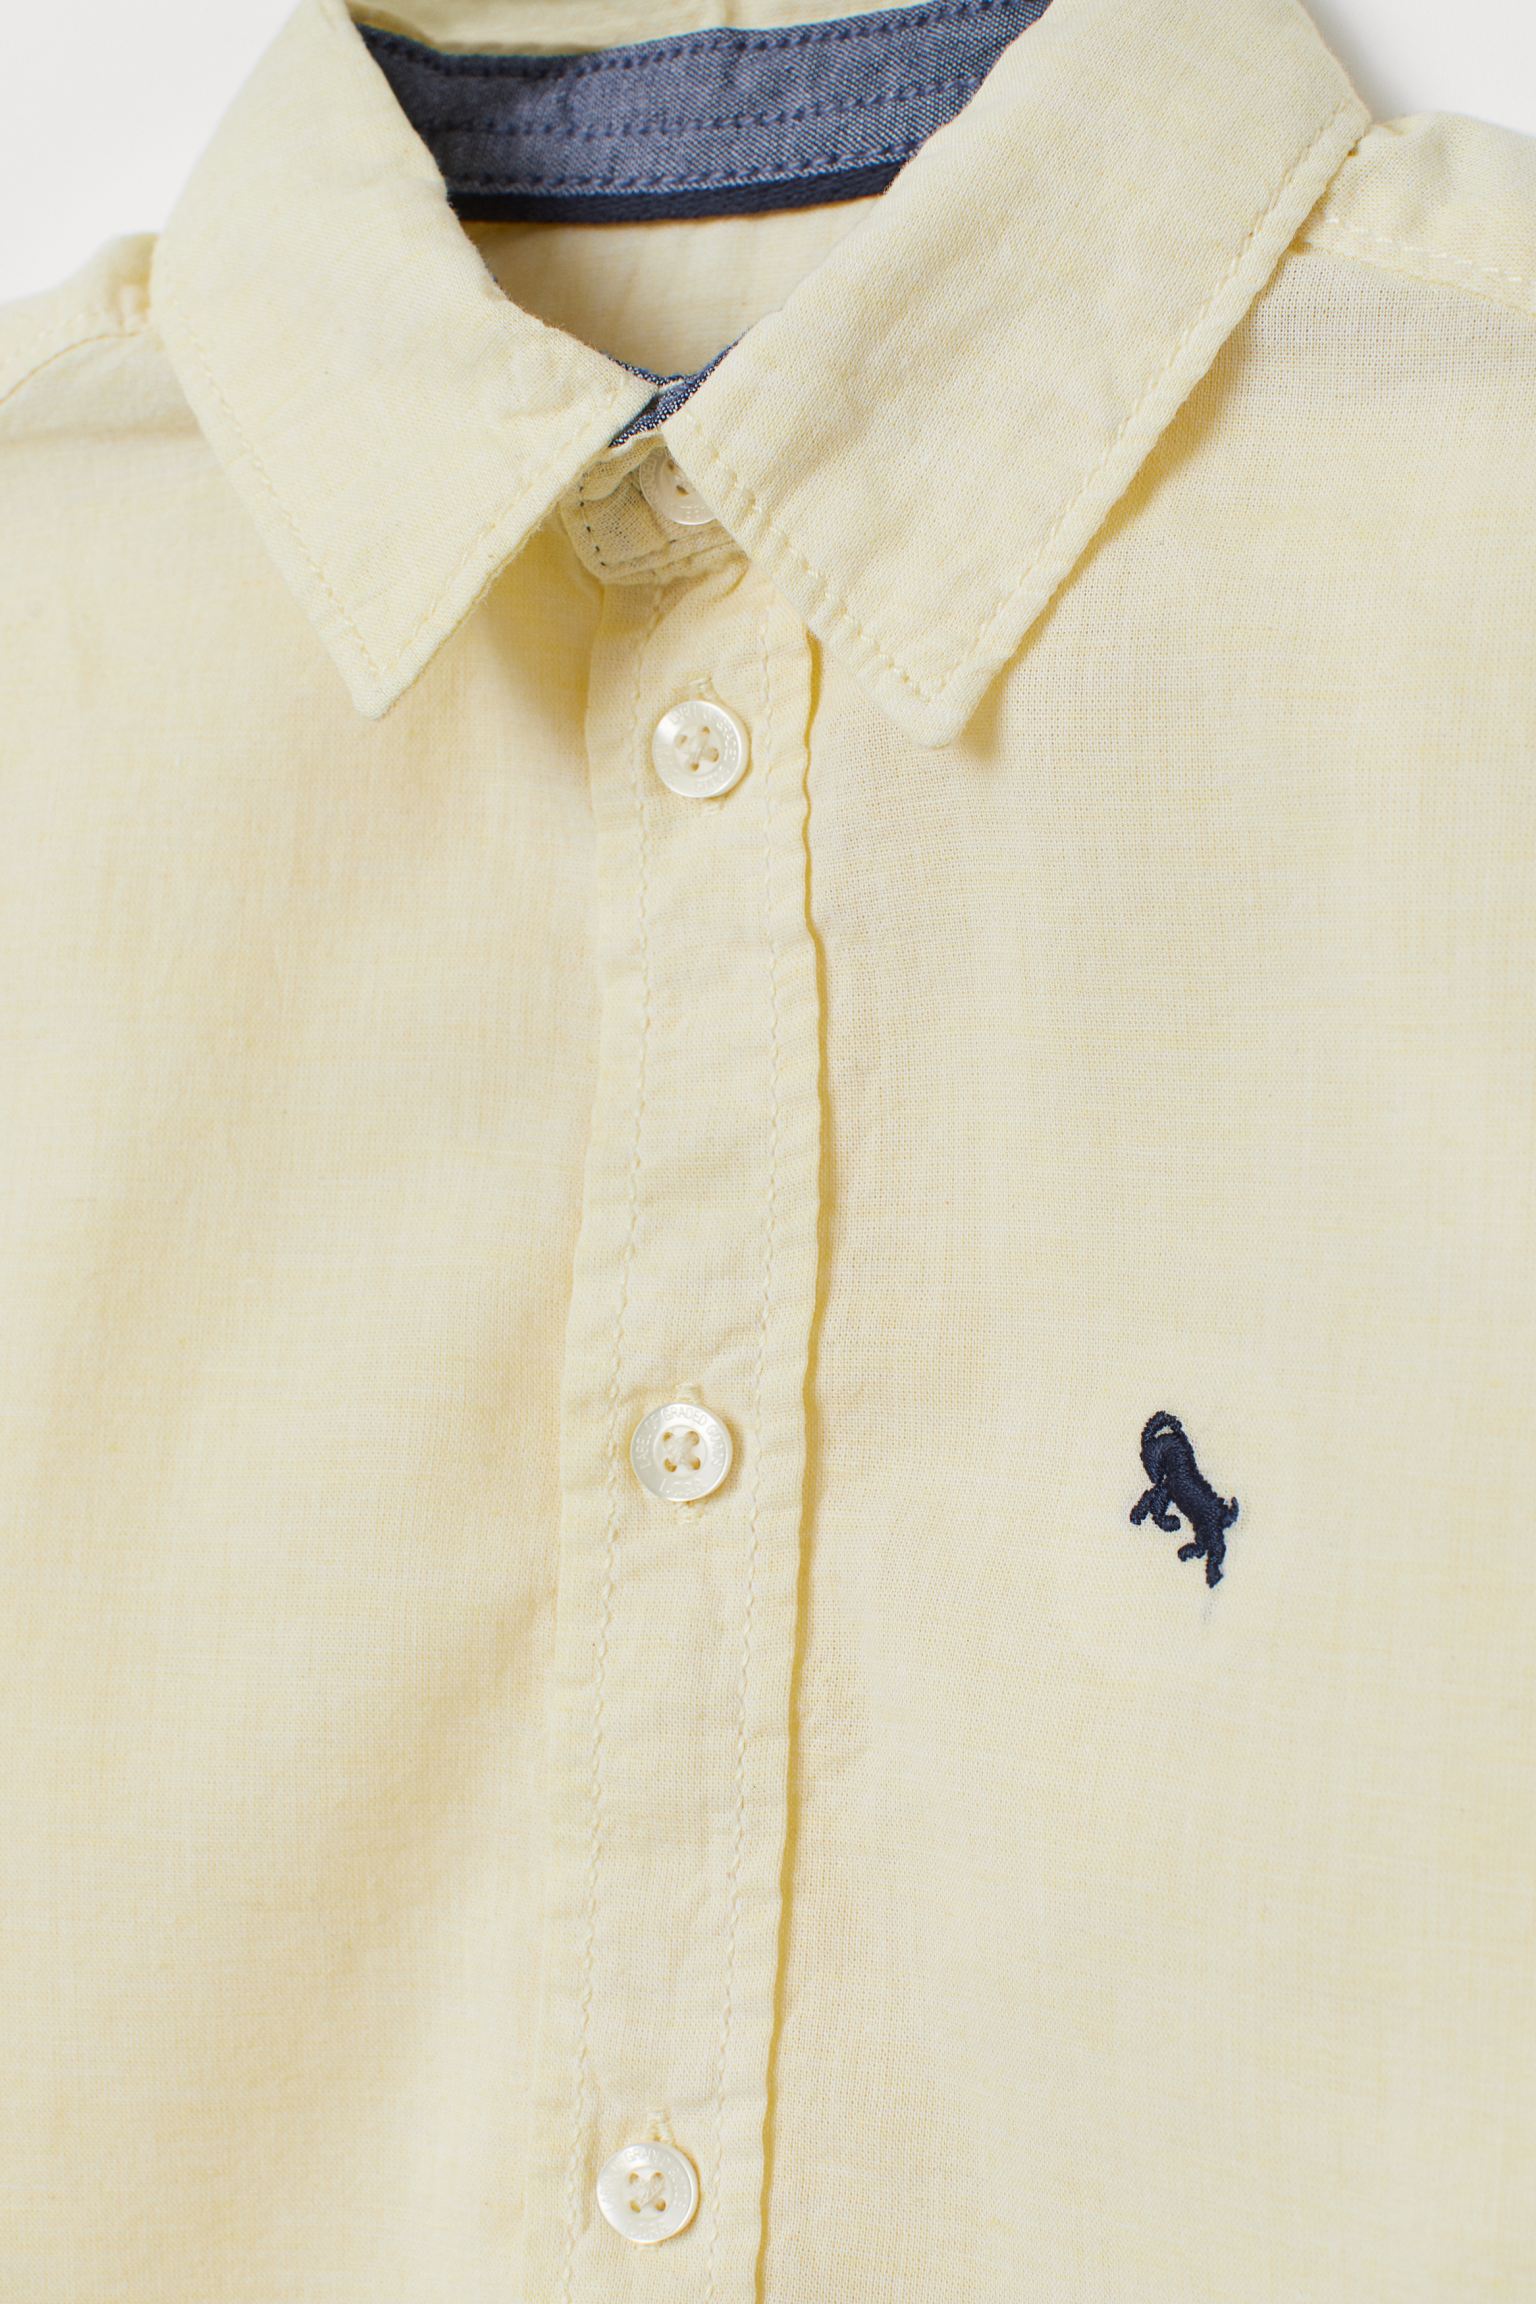 پیراهن پسرانه 34800 سایز 1.5 تا 14 سال کد 4 مارک H&M